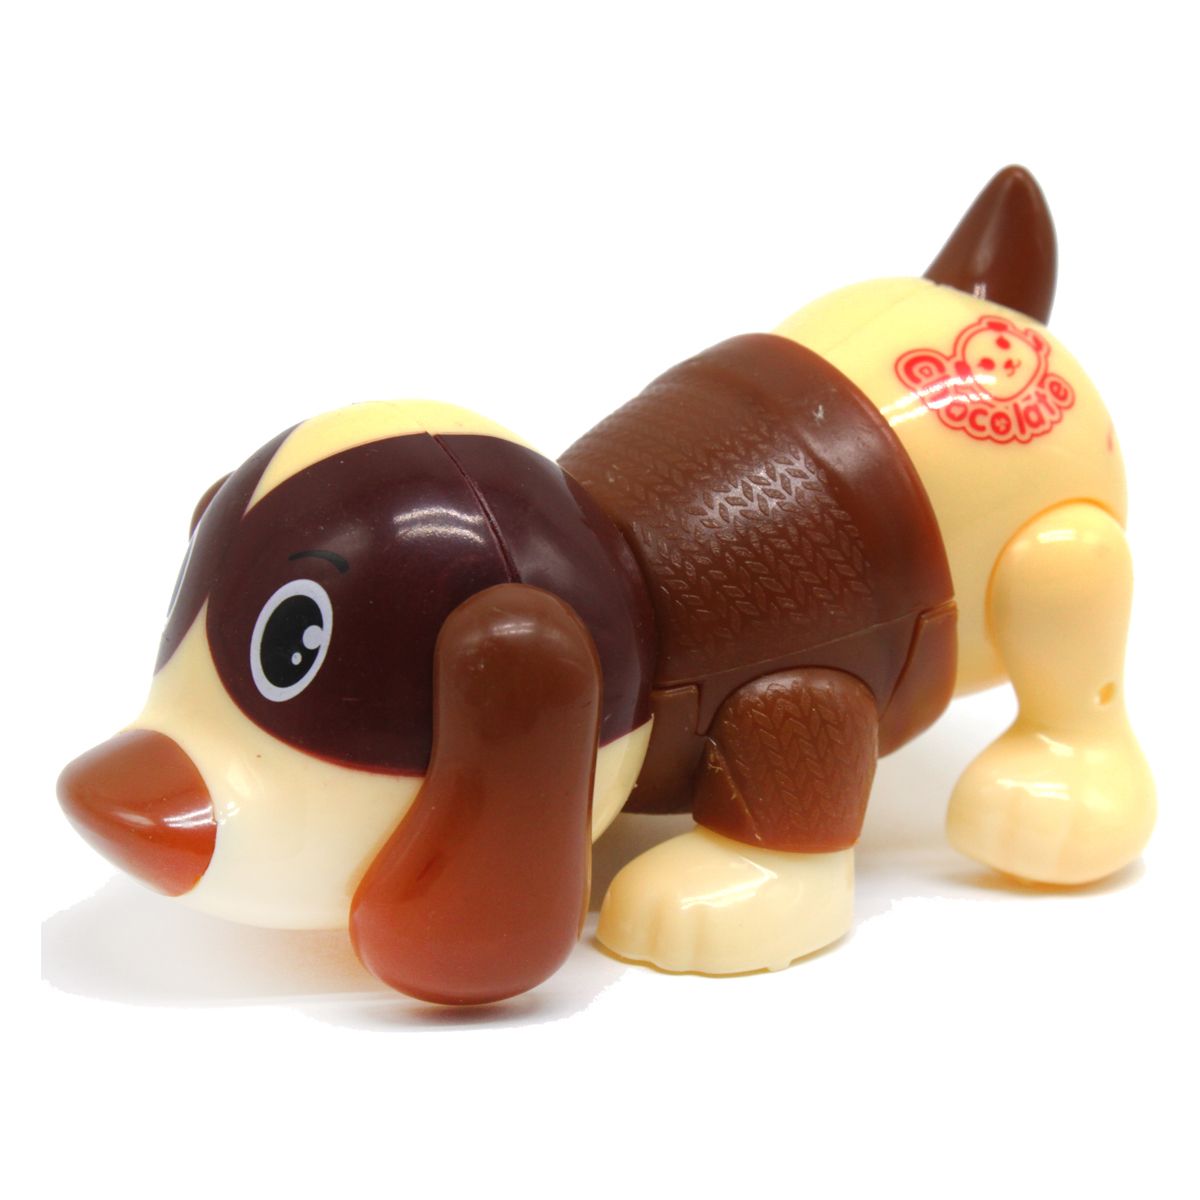 Заводна іграшка "Собачка", коричнева